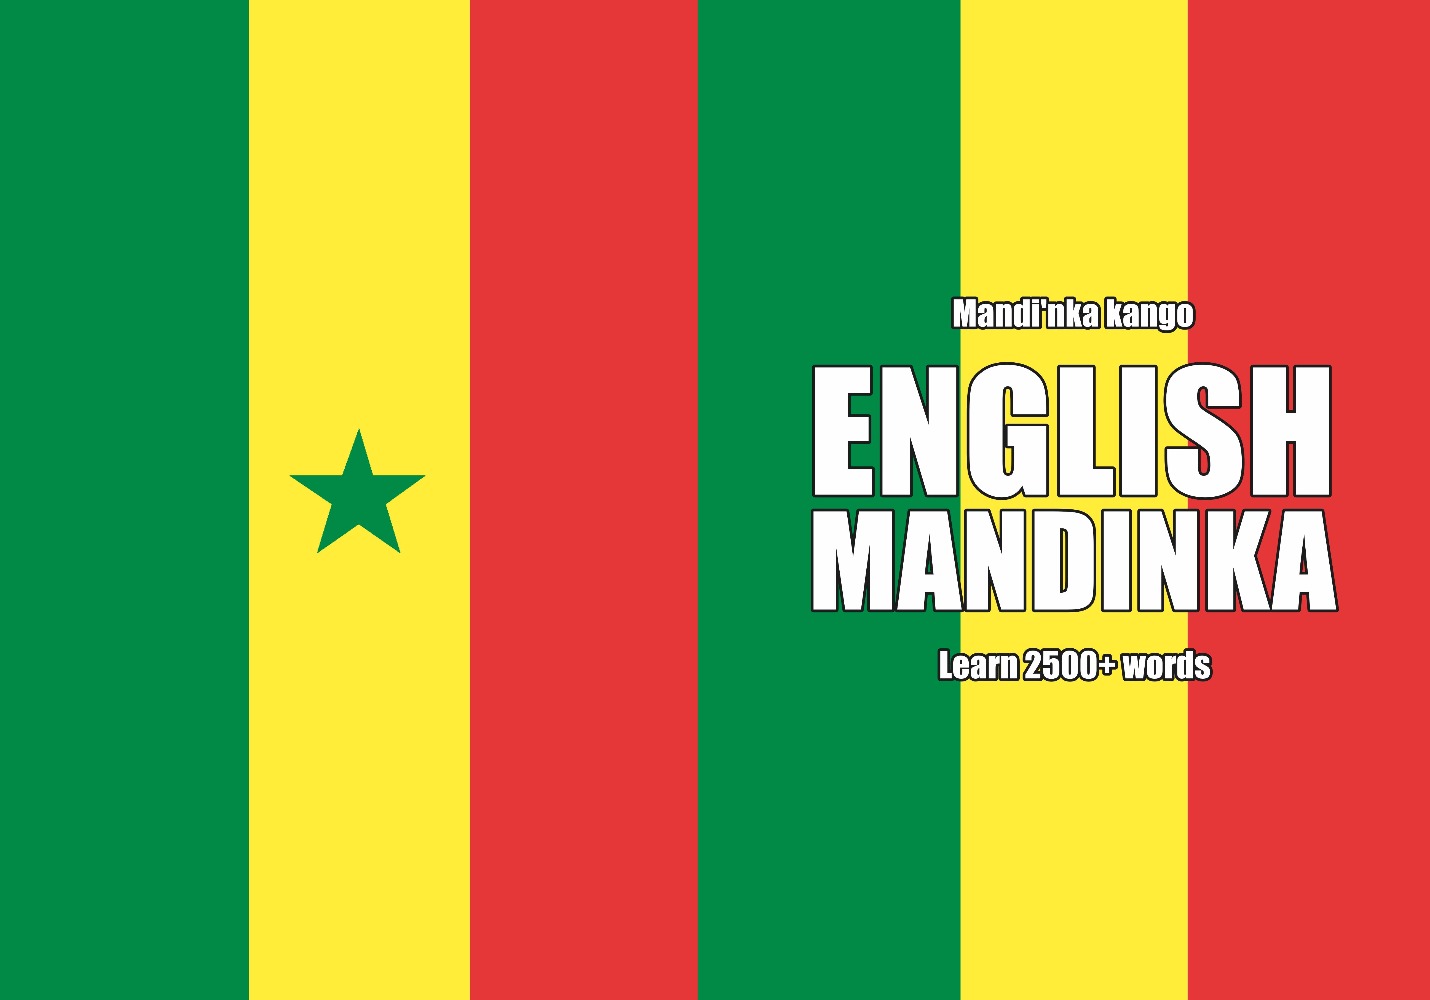 Mandinka language learning notebook cover